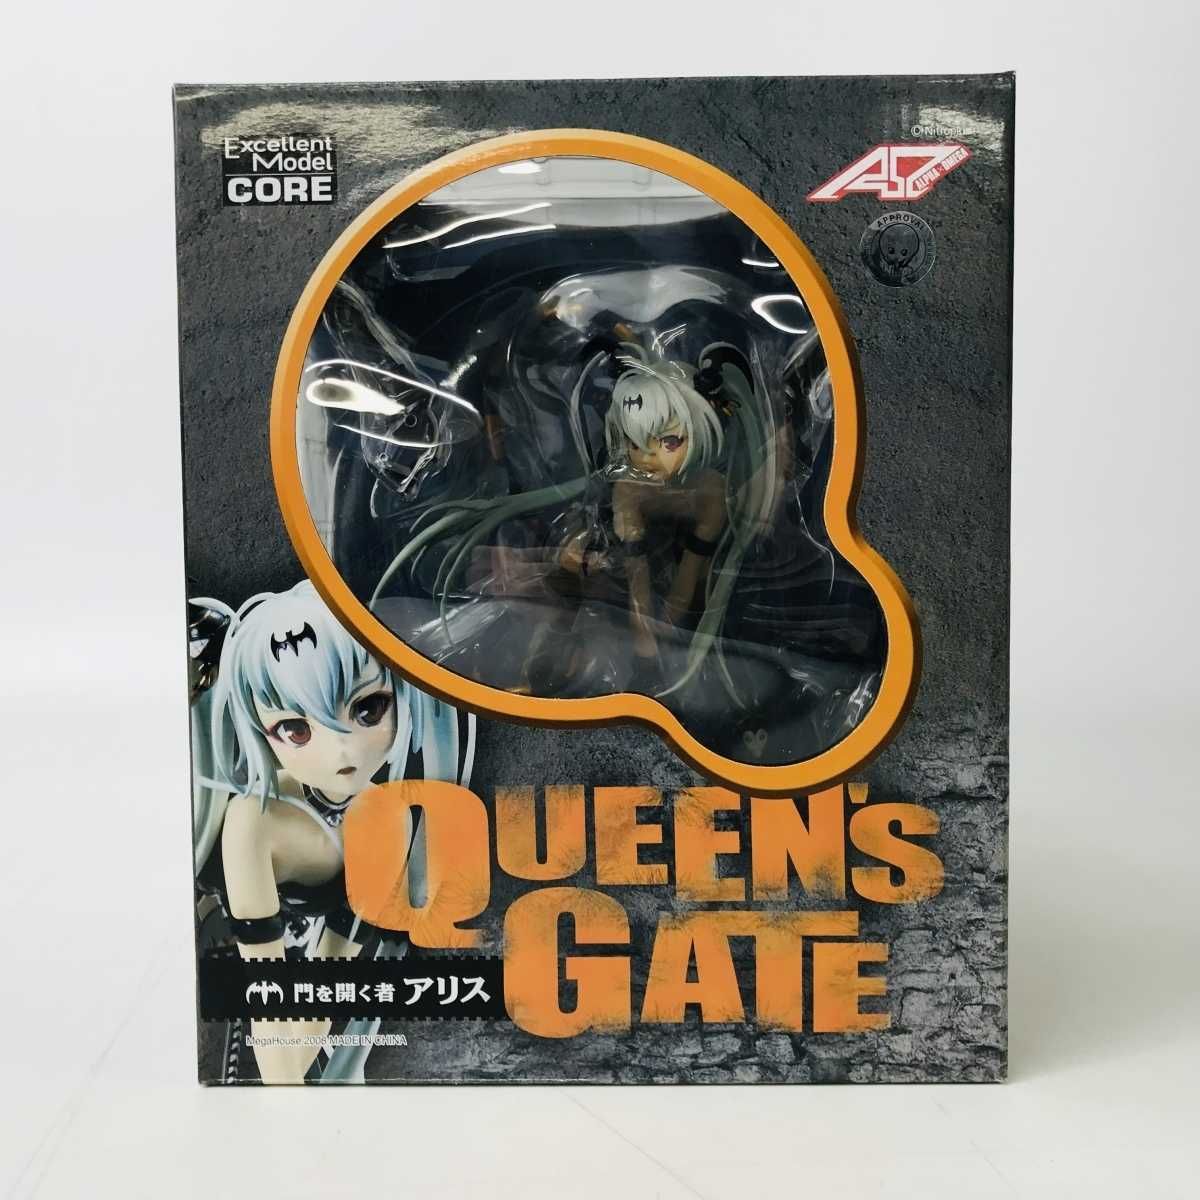 Figurka Anime Manga Queen's Gate - Alice - Excellent Model Core